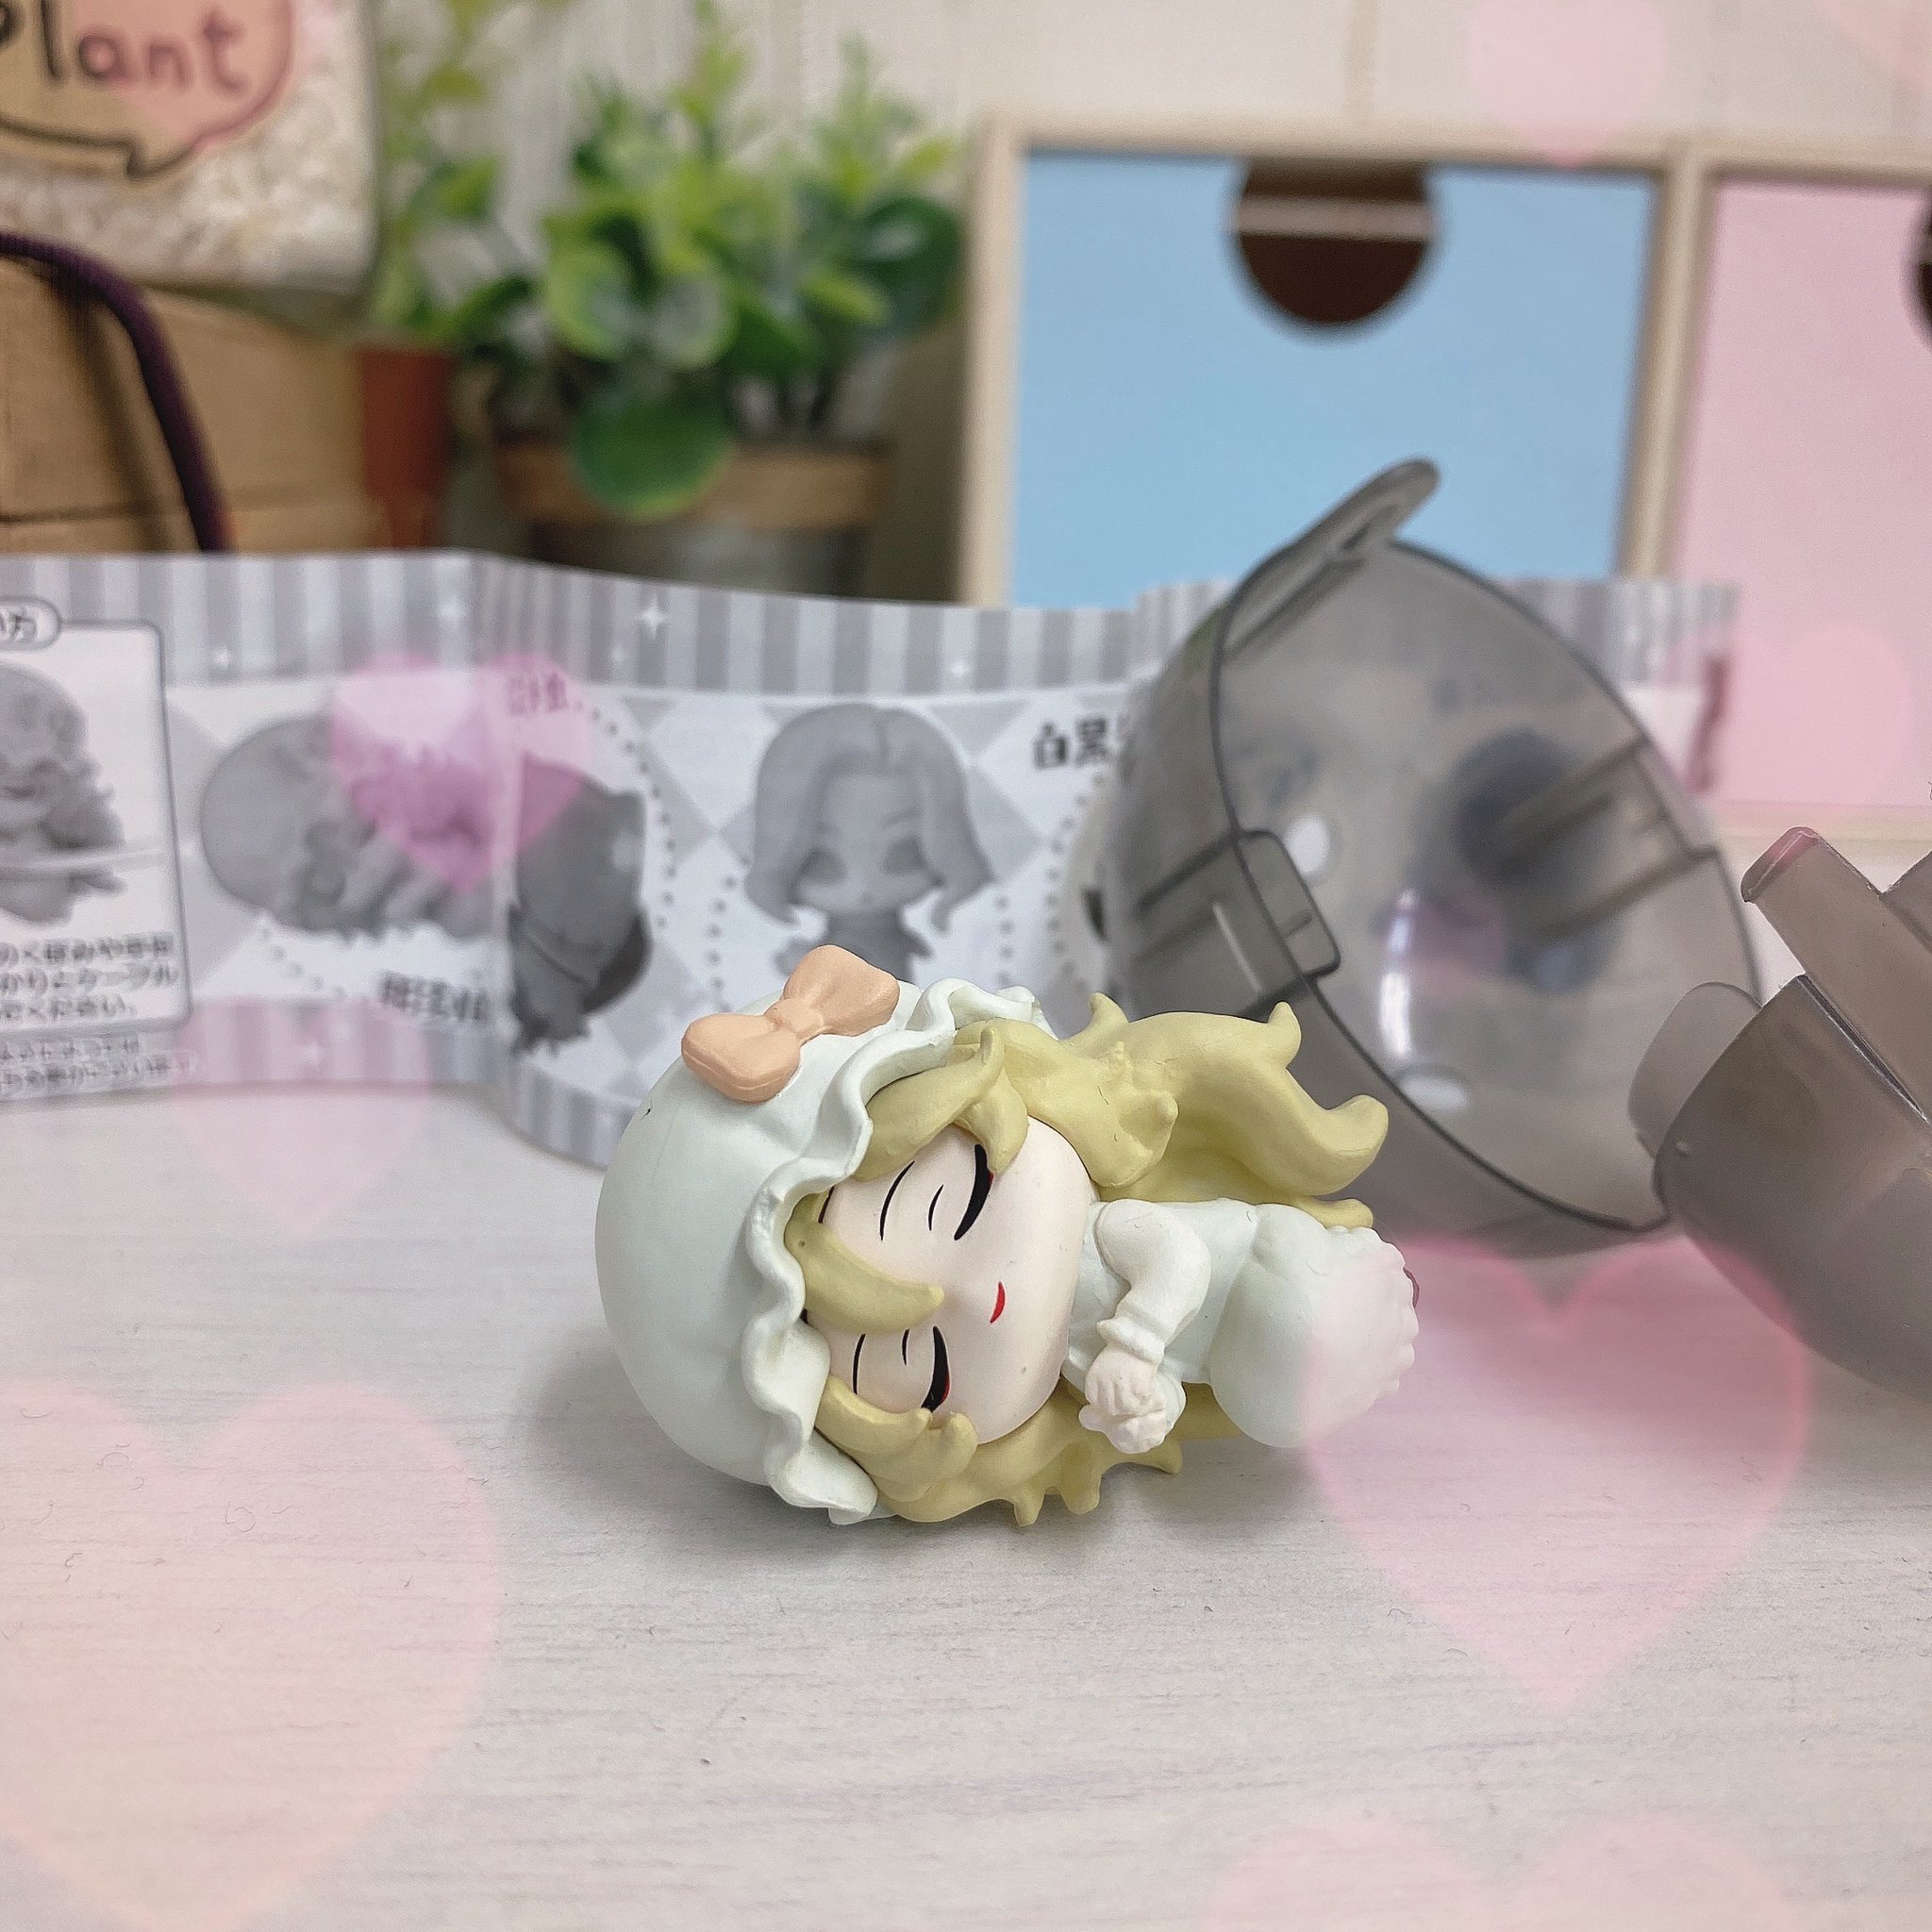 Yukafin Doll : Afilia Saga | ユカフィン・ドール : アフィリア・サーガ